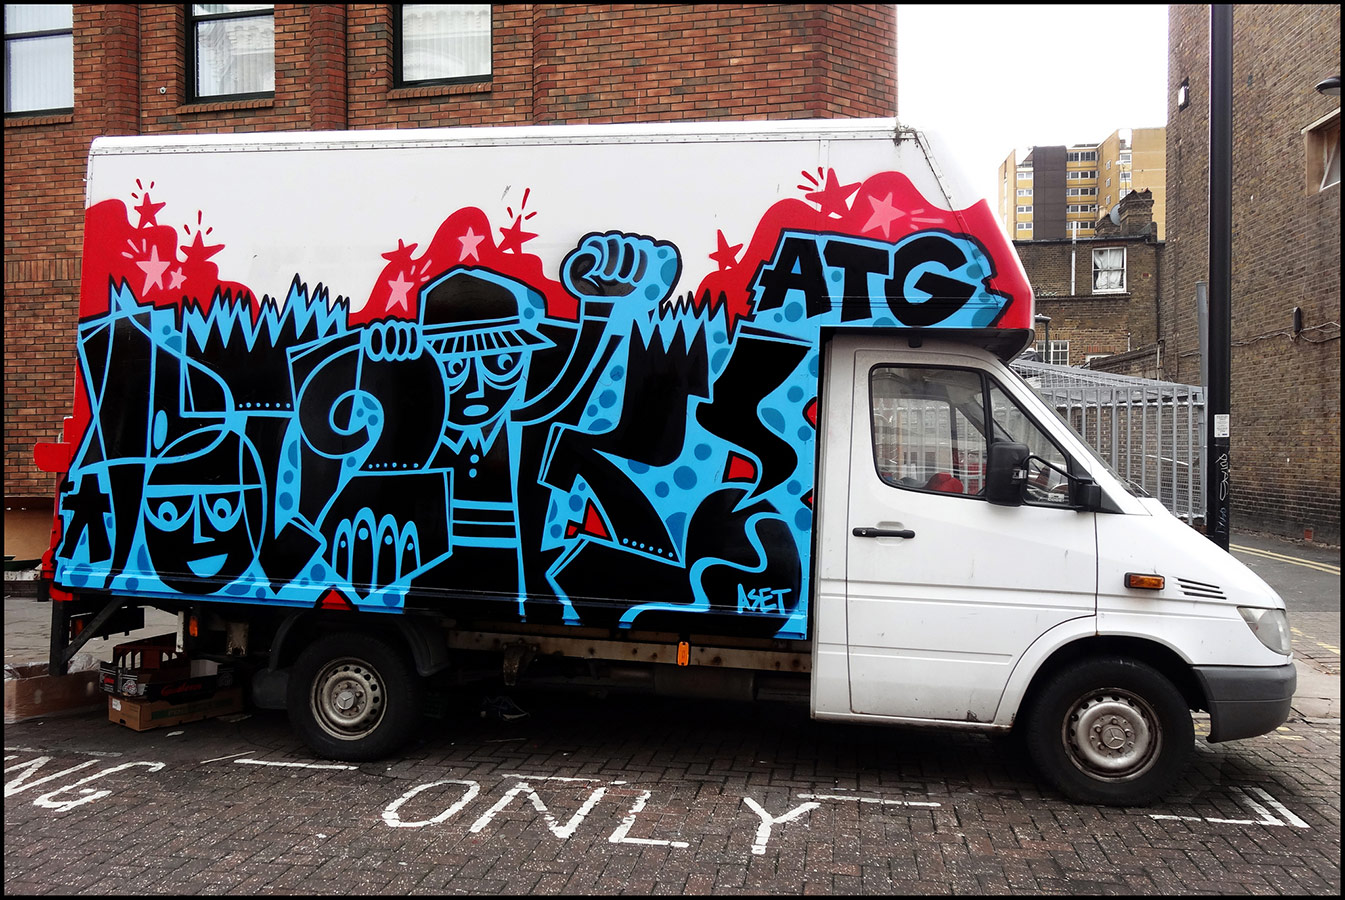  panik truck london ukingdom